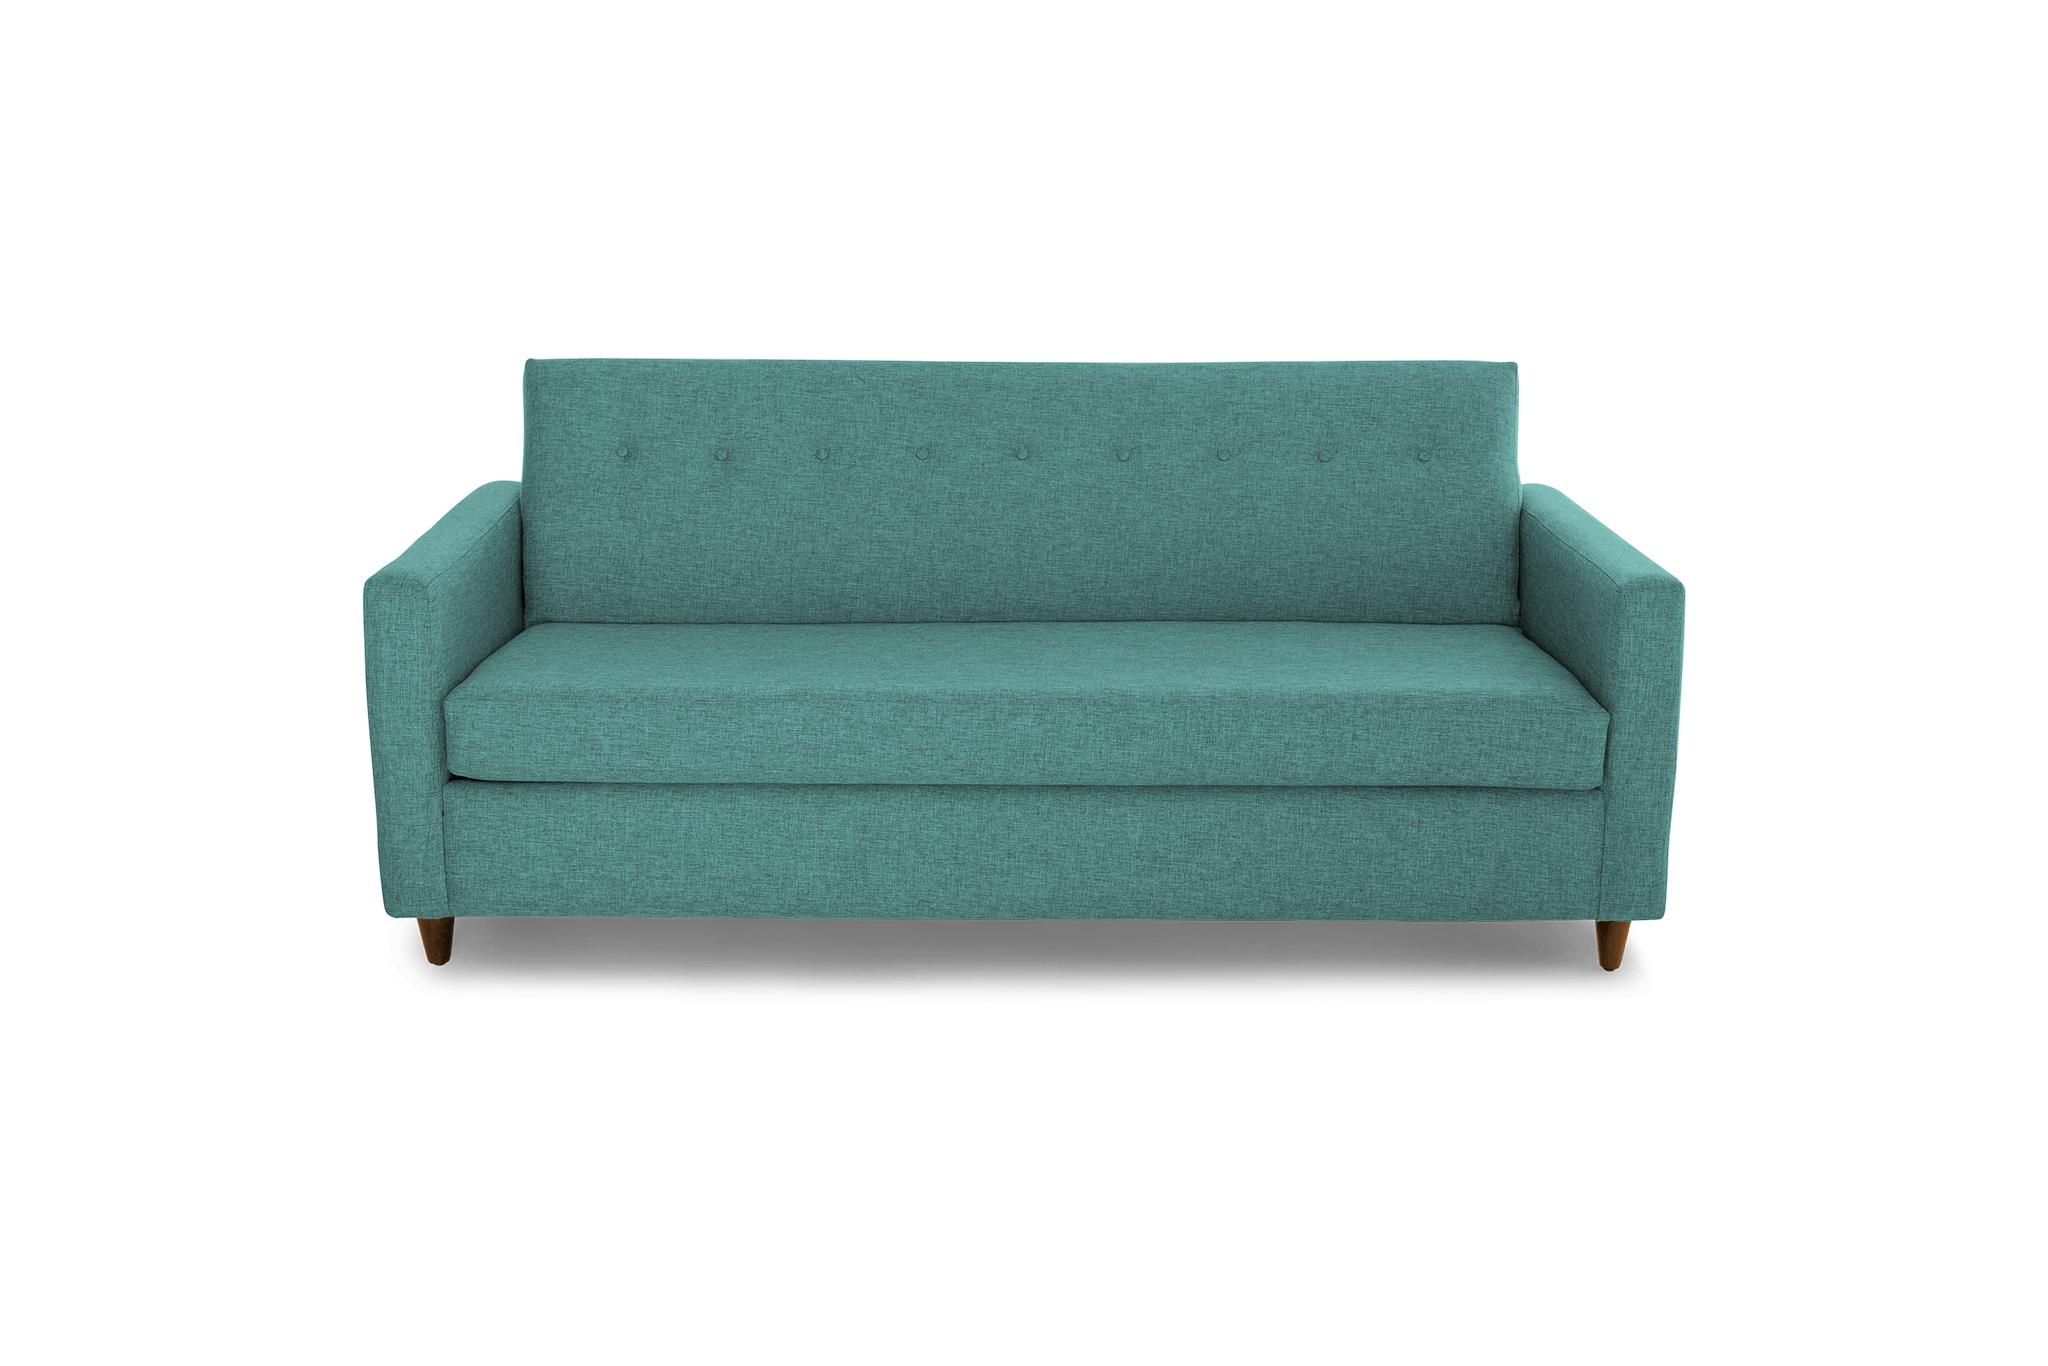 Green Korver Mid Century Modern Sleeper Sofa - Essence Aqua - Mocha - Image 0